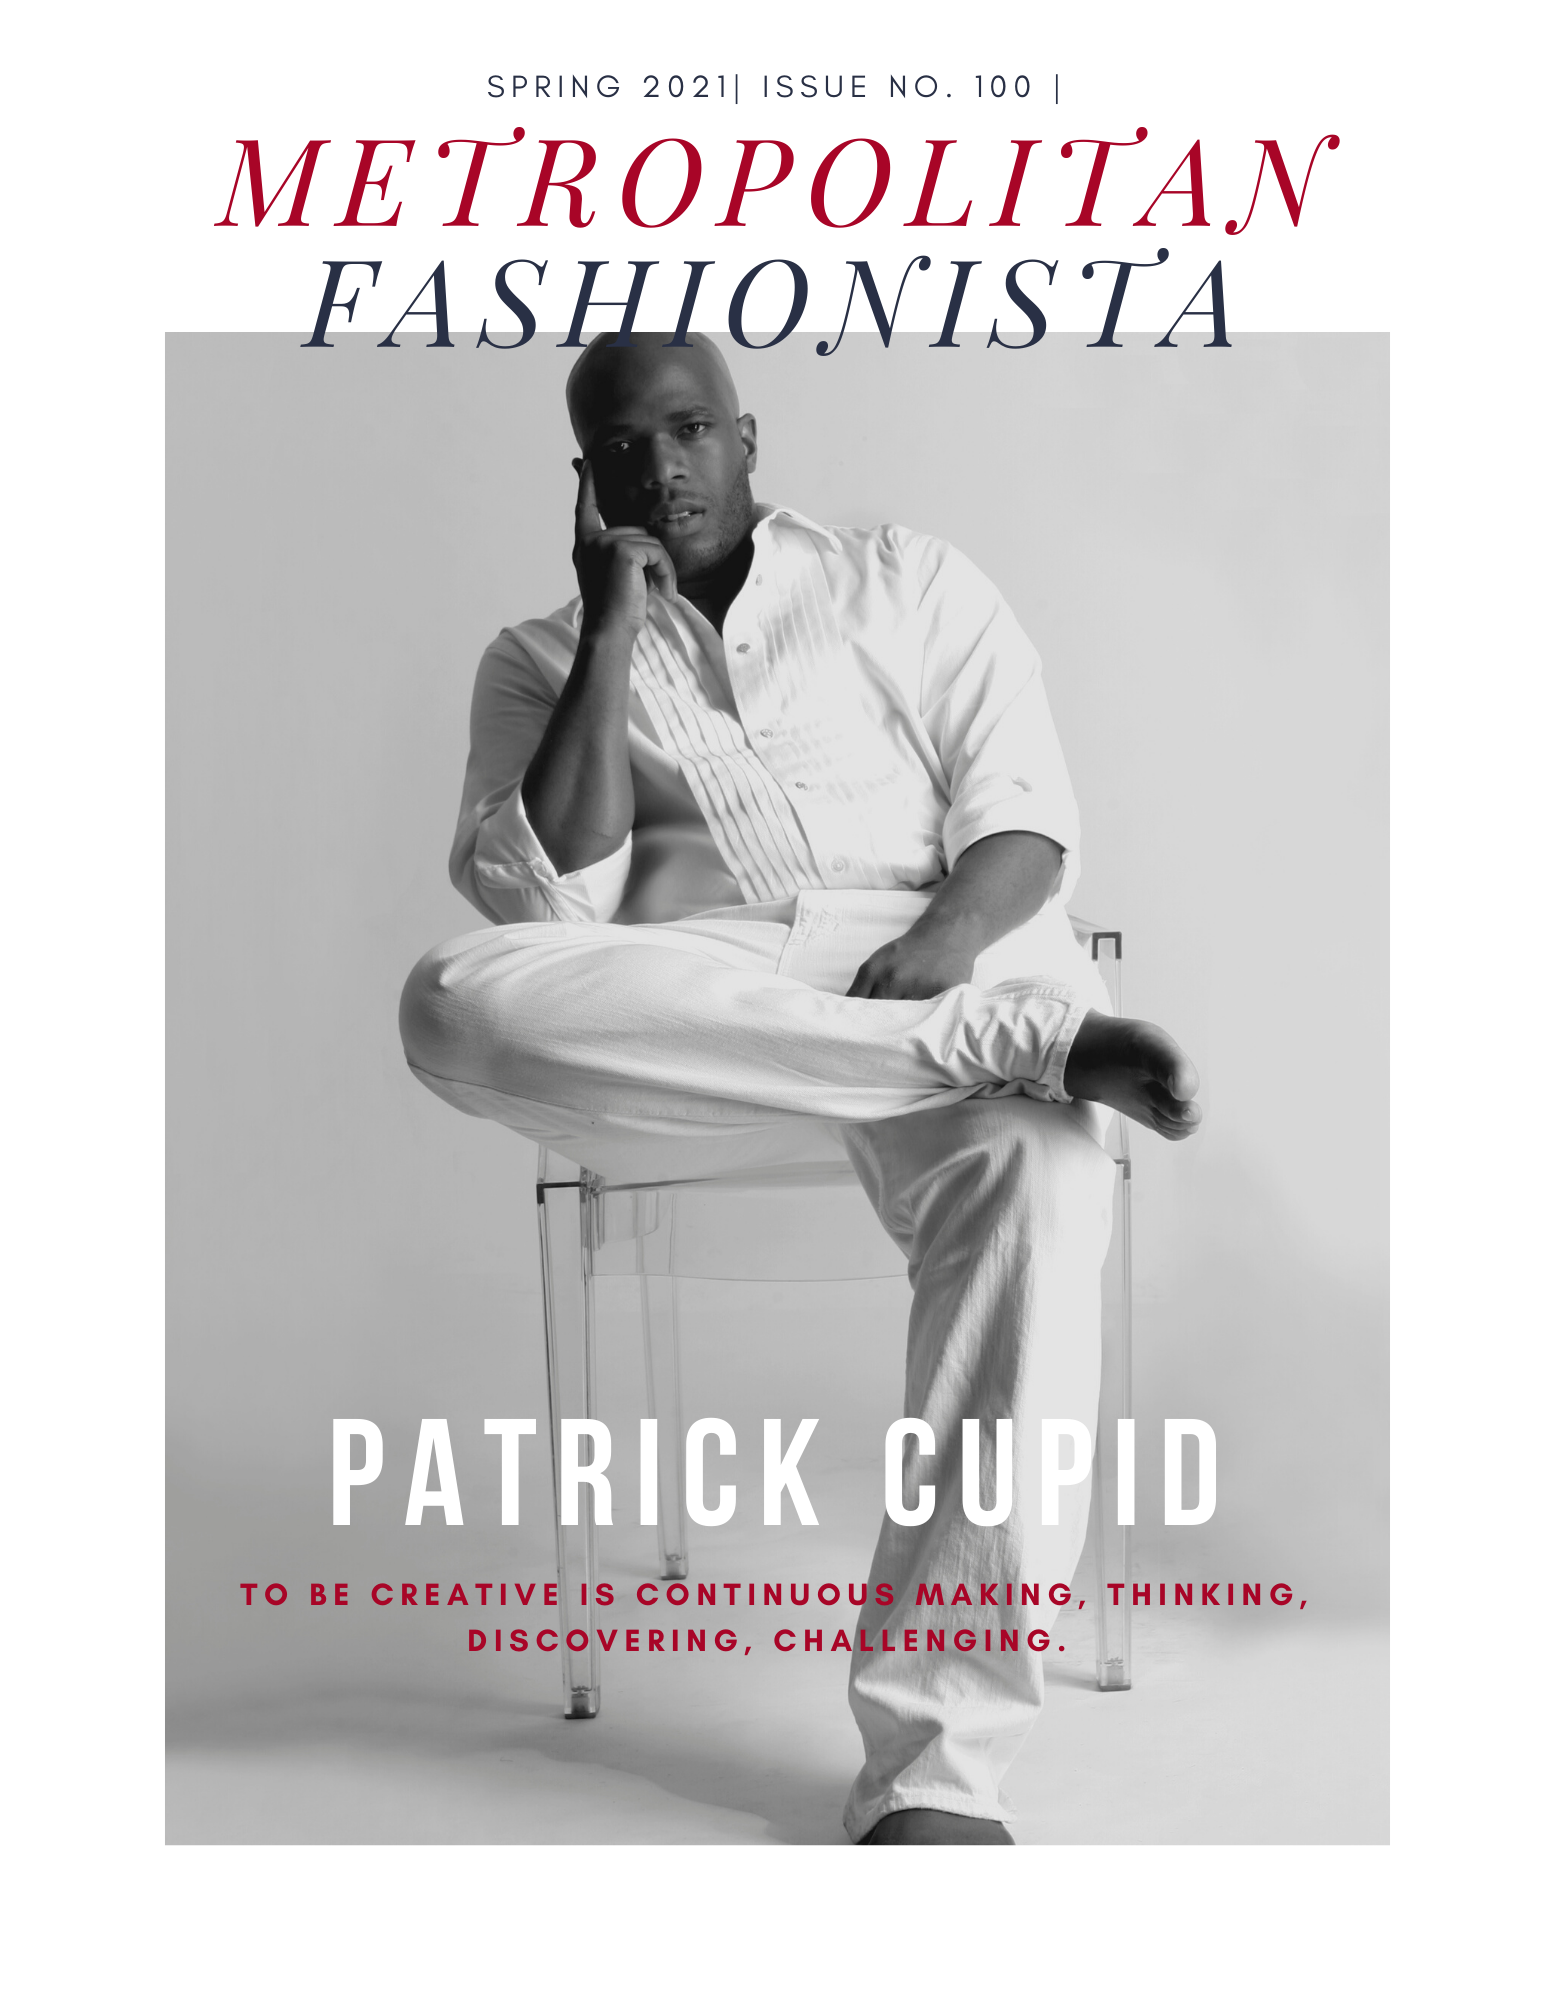 Interview With Patrick Louis Vuitton, Fashion